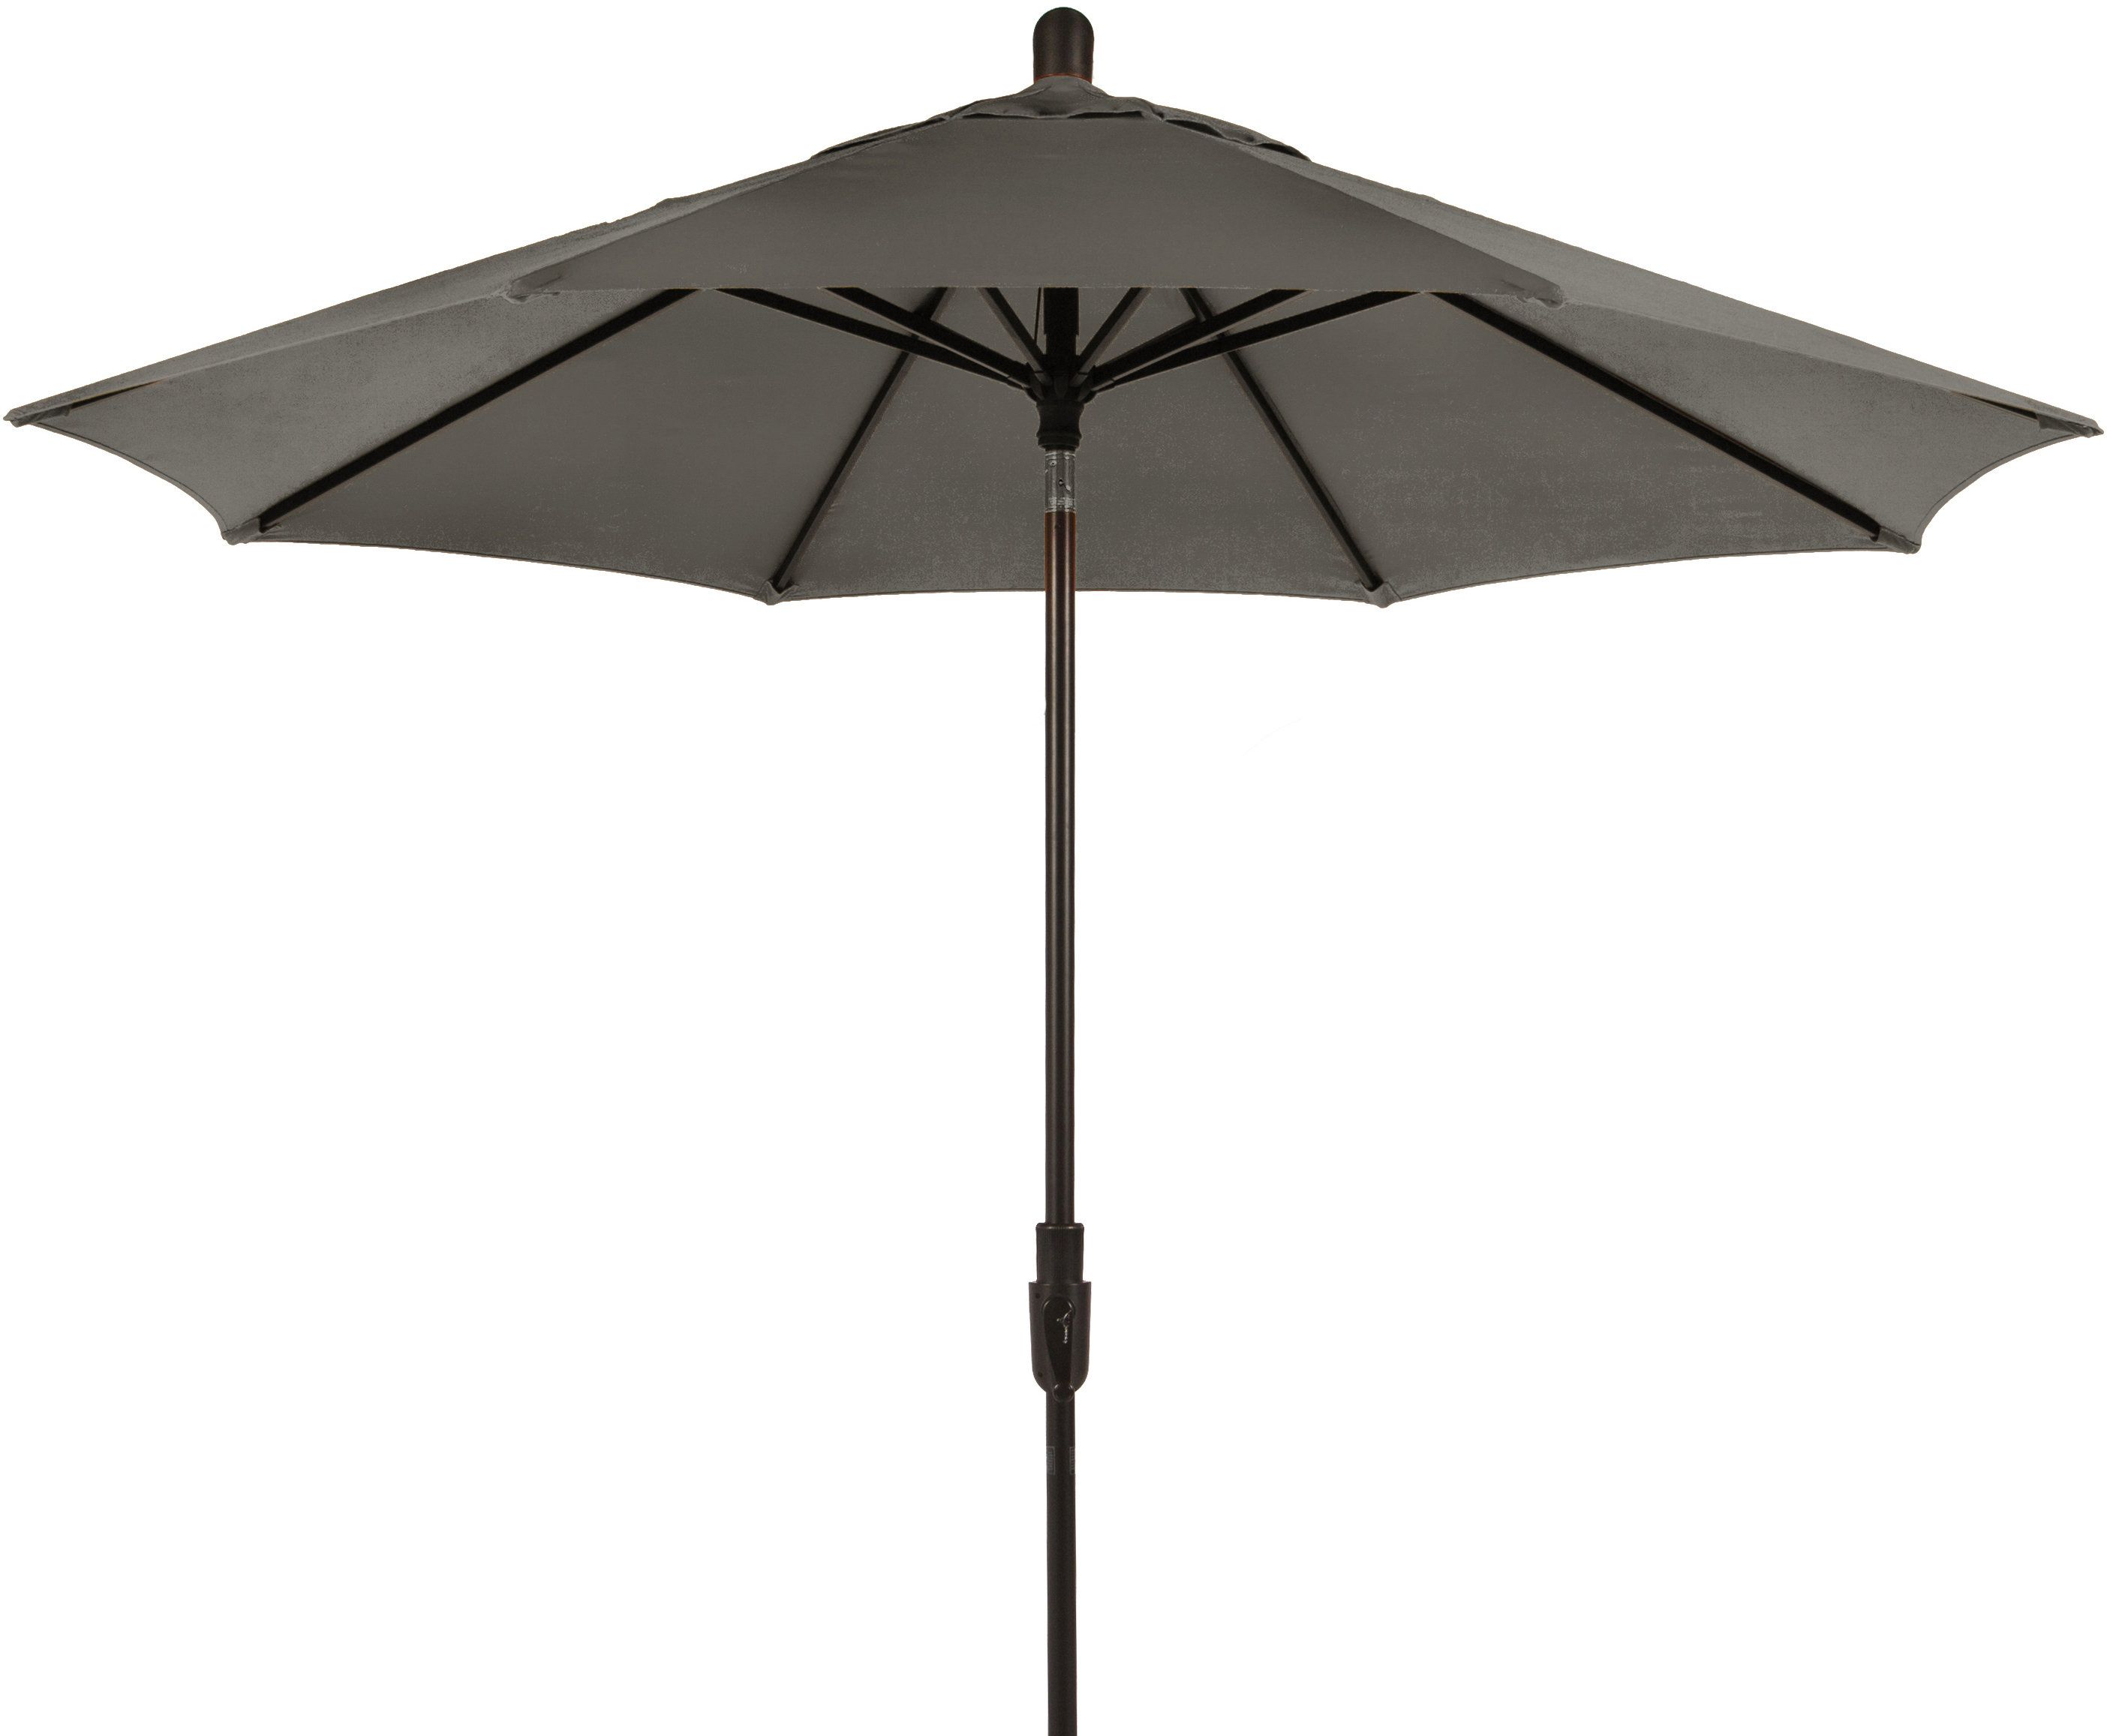 Wiebe Market Sunbrella Umbrellas With Favorite Wiebe 9' Market Umbrella (View 5 of 20)